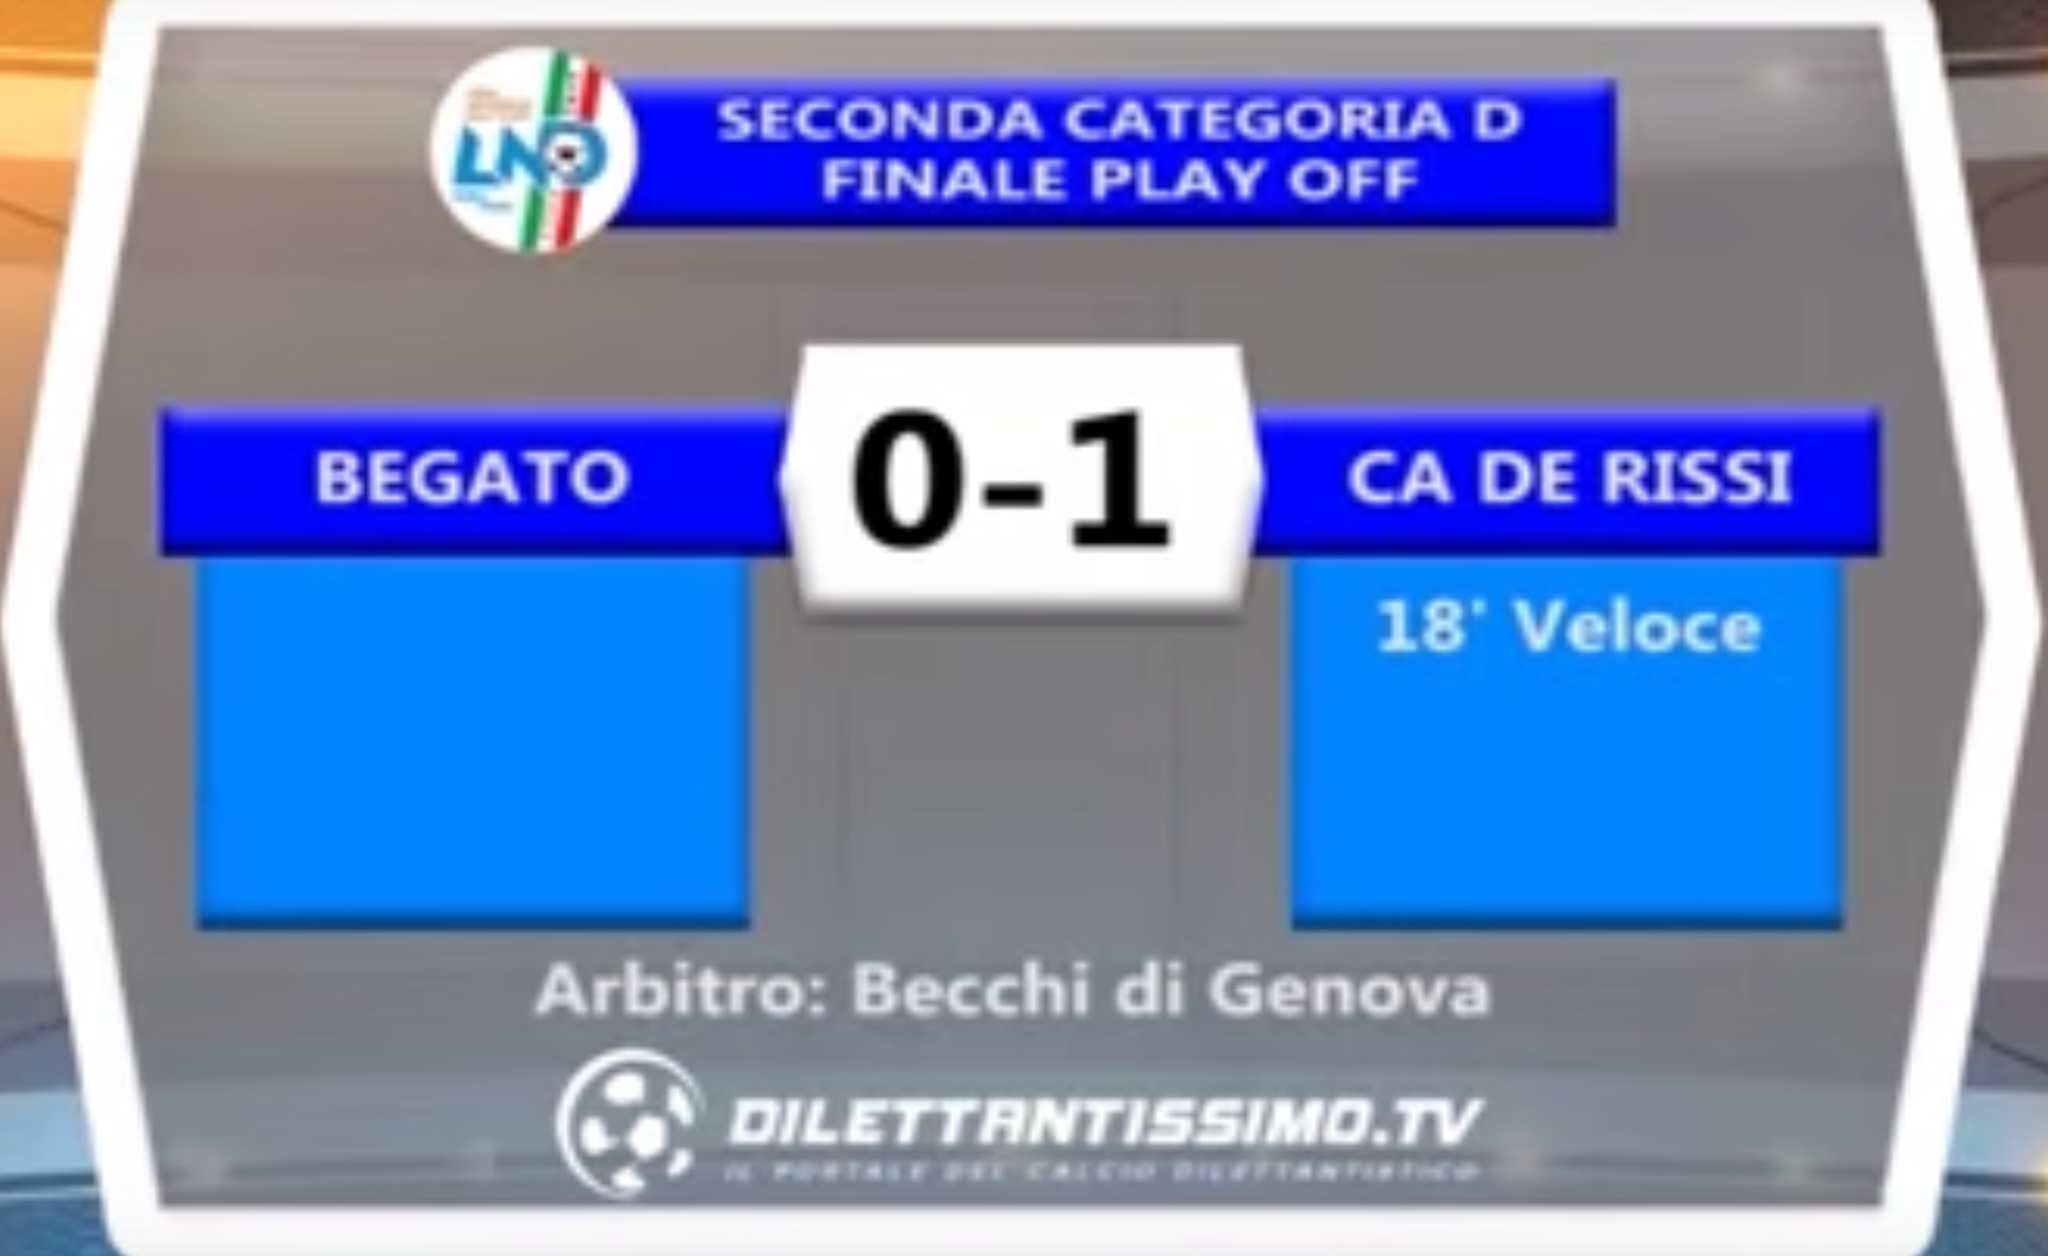 BEGATO - CA DE RISSI 0-1 | FINALE PLAY OFF SECONDA CATEGORIA D